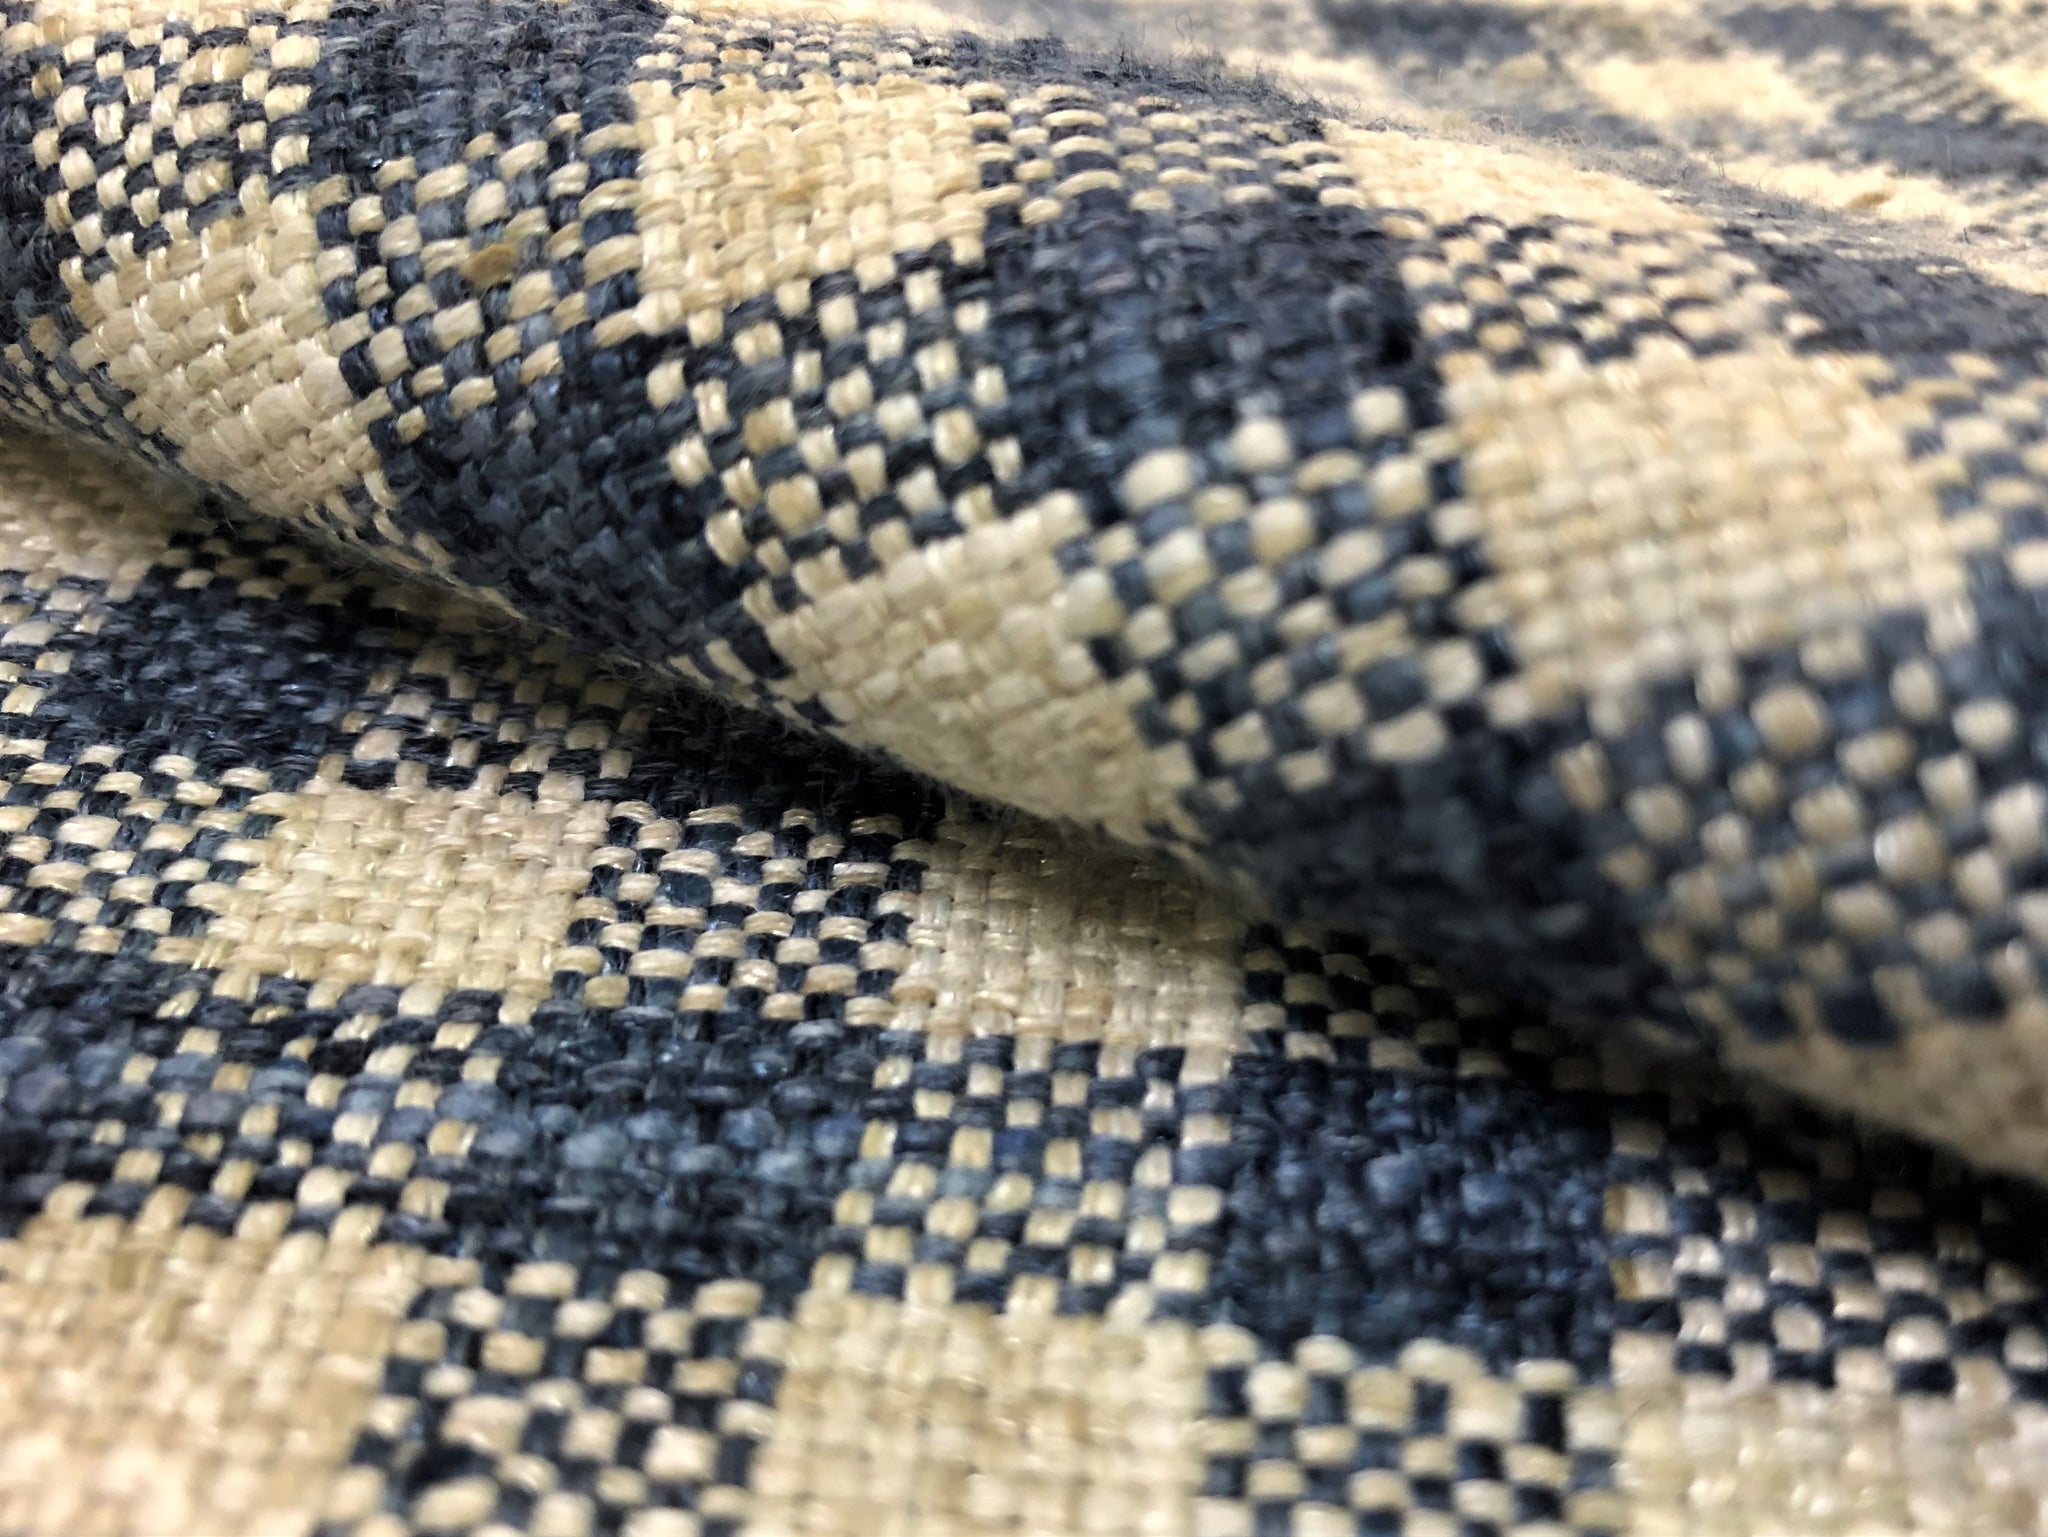 Pindler & Pindler Hemingway Sisal Fabric - Drapery & Upholstery Décor Fabric